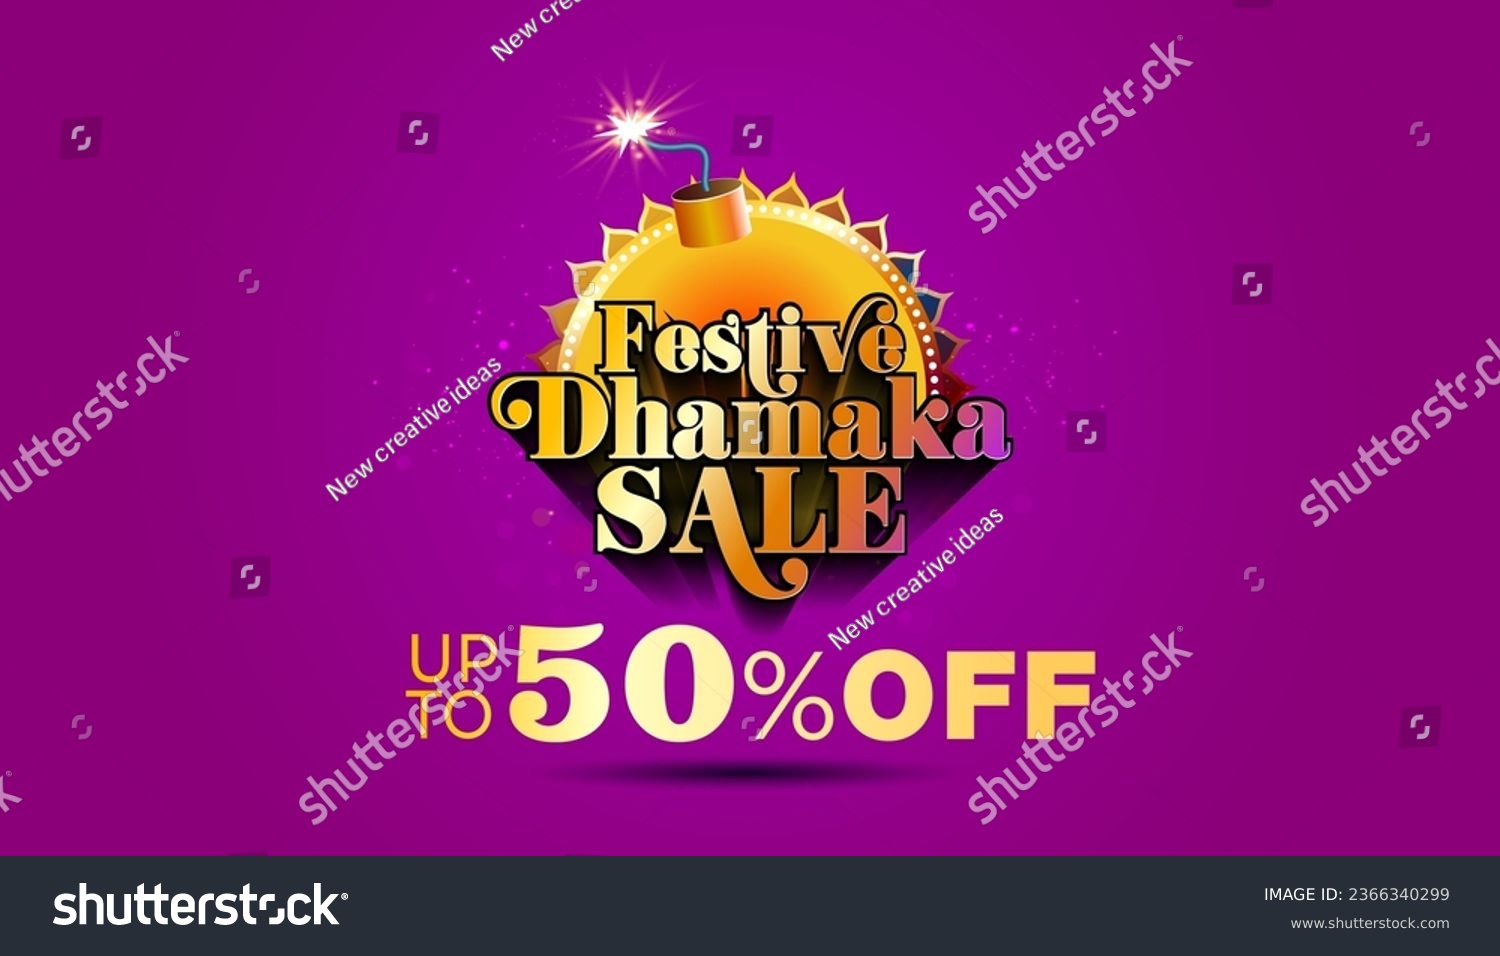 SVG of Vector illustration of Indian Festive dhamaka sale offer and promotional logo, advertising background design. svg